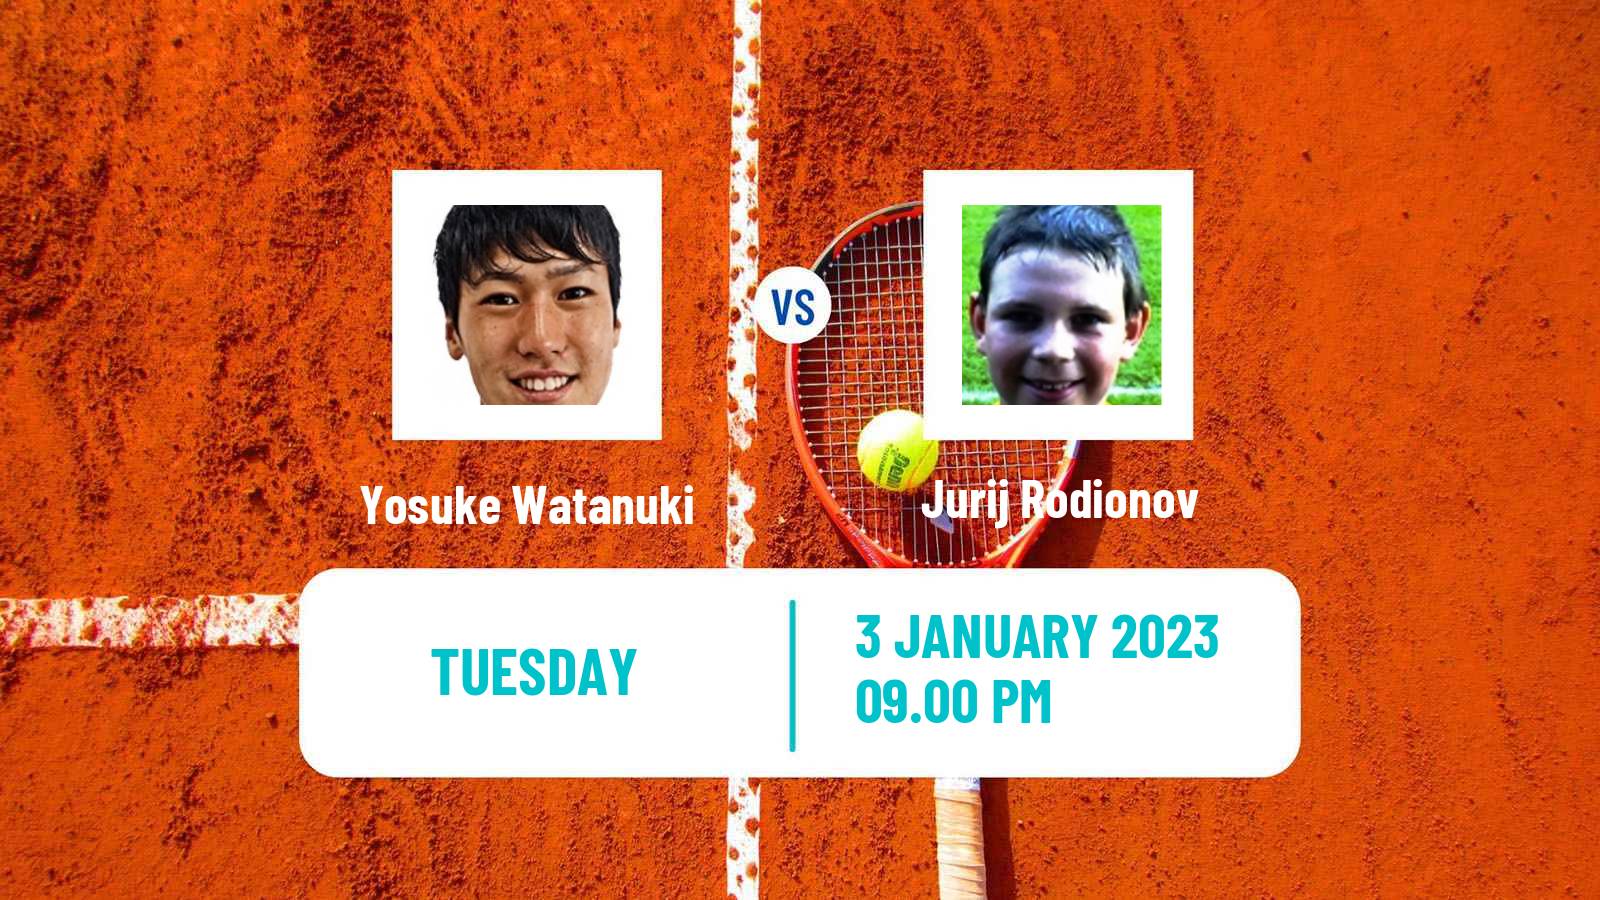 Tennis ATP Challenger Yosuke Watanuki - Jurij Rodionov